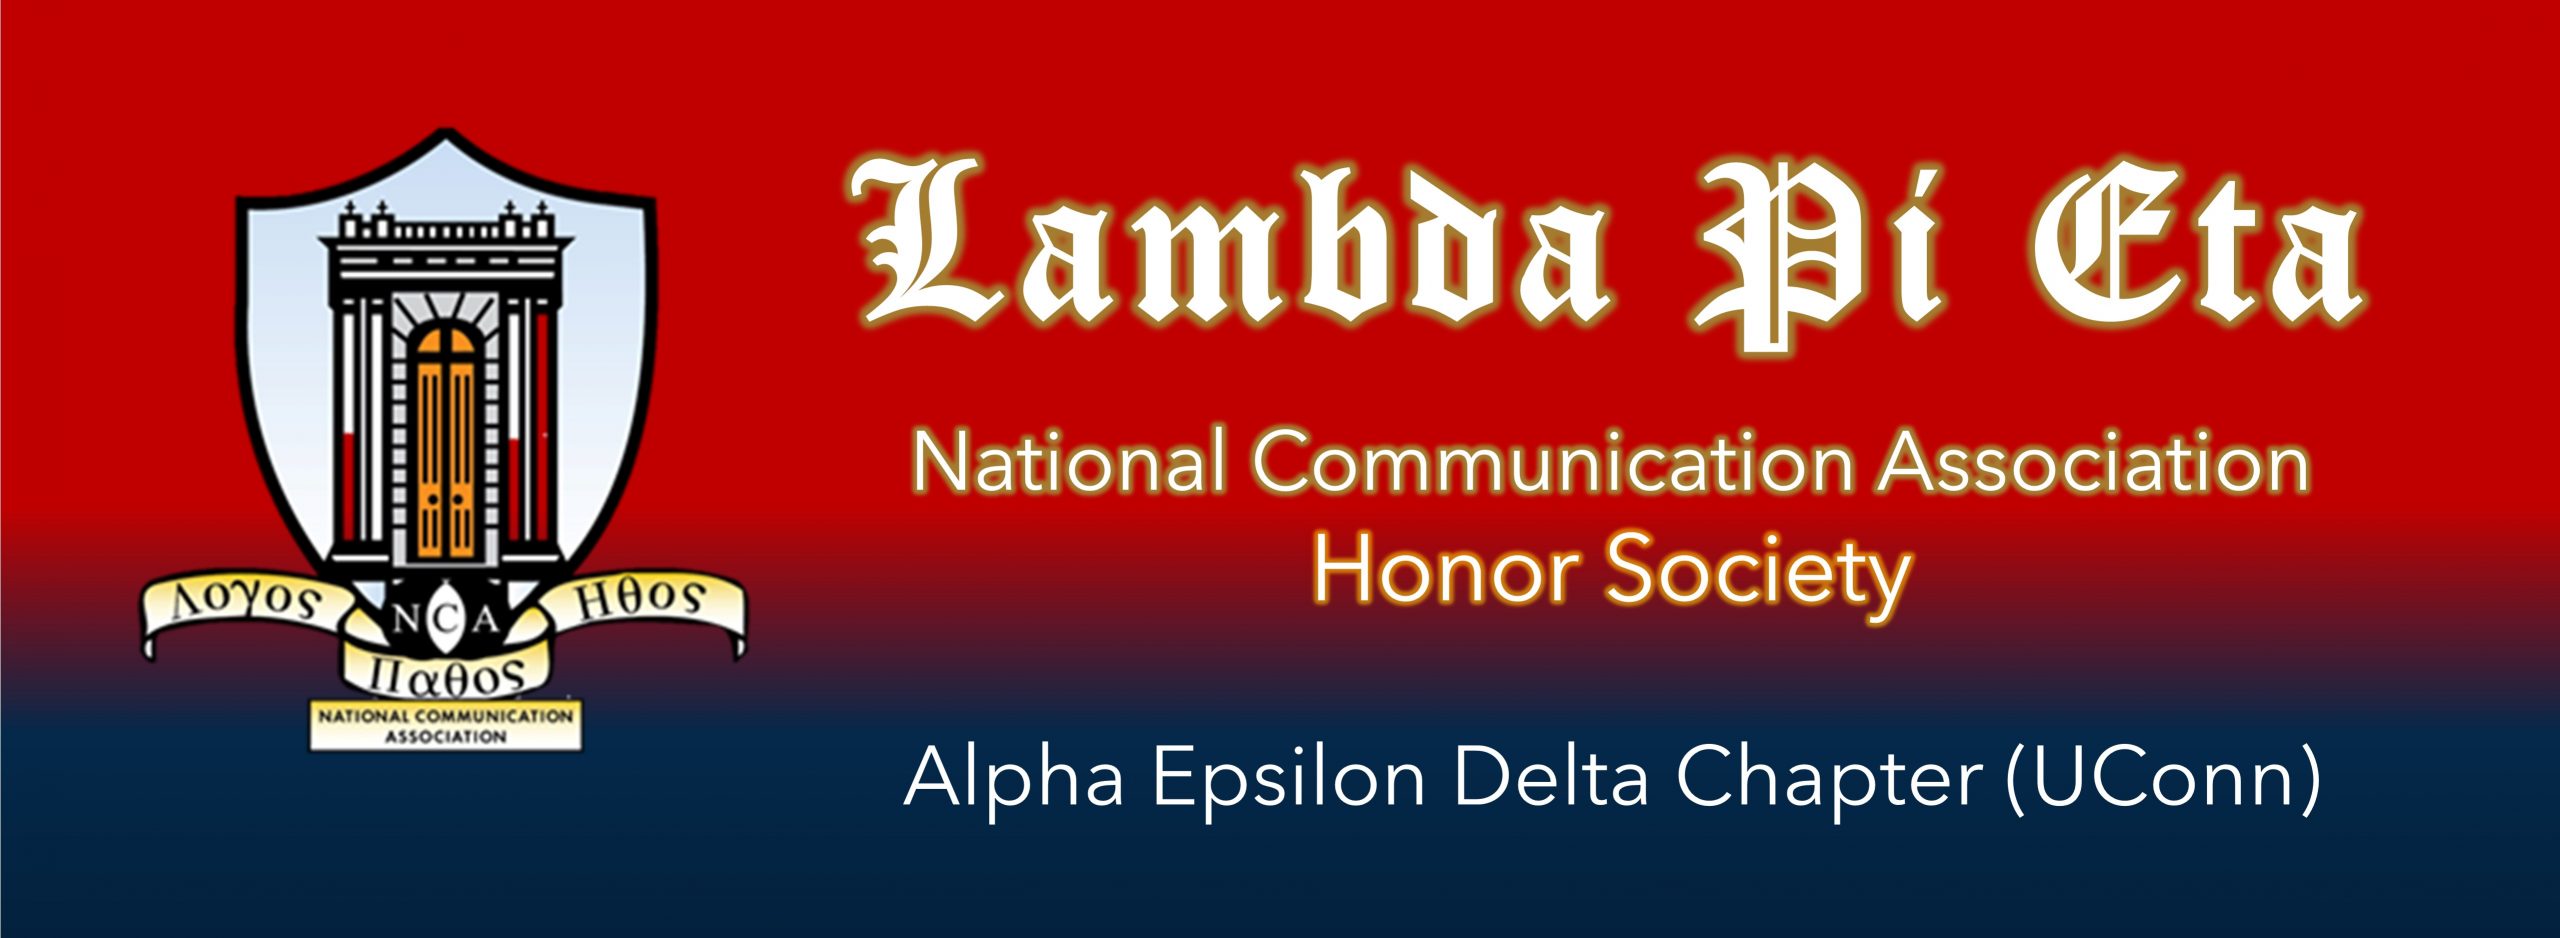 Lambda Pi Eta National Communication Association Honor Society, Alpha Epsilon Delta Chapter (UConn)